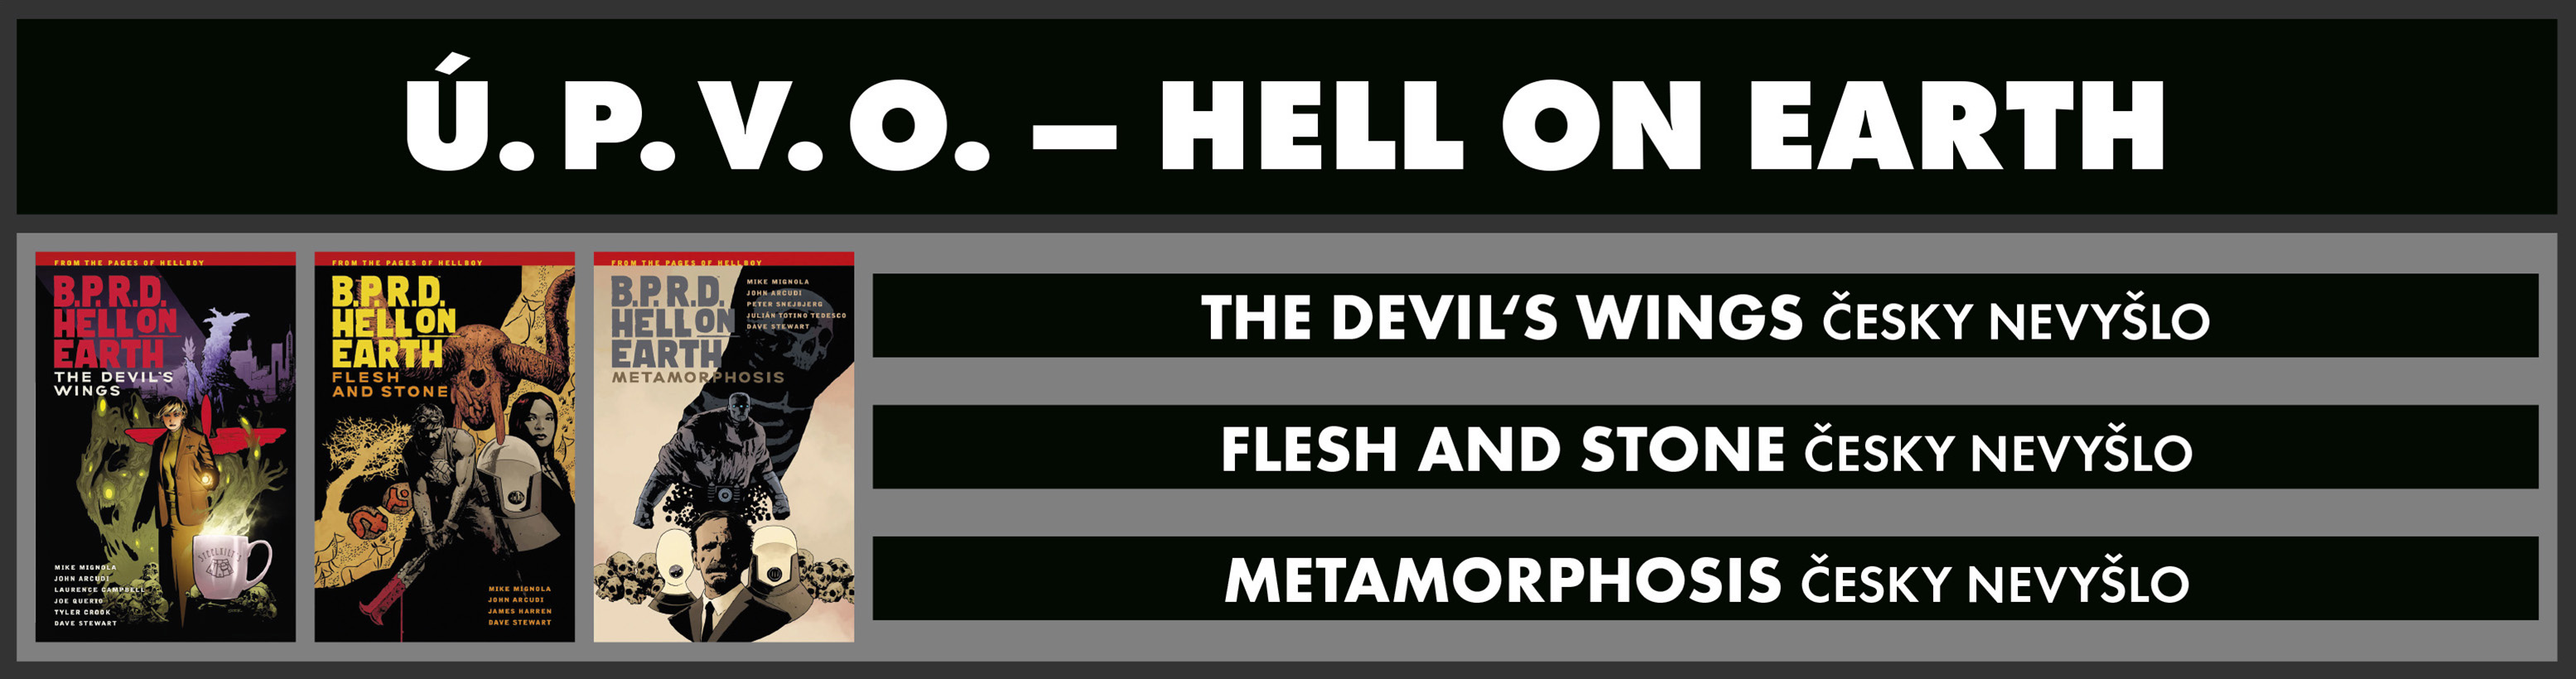 Hellboy Universum